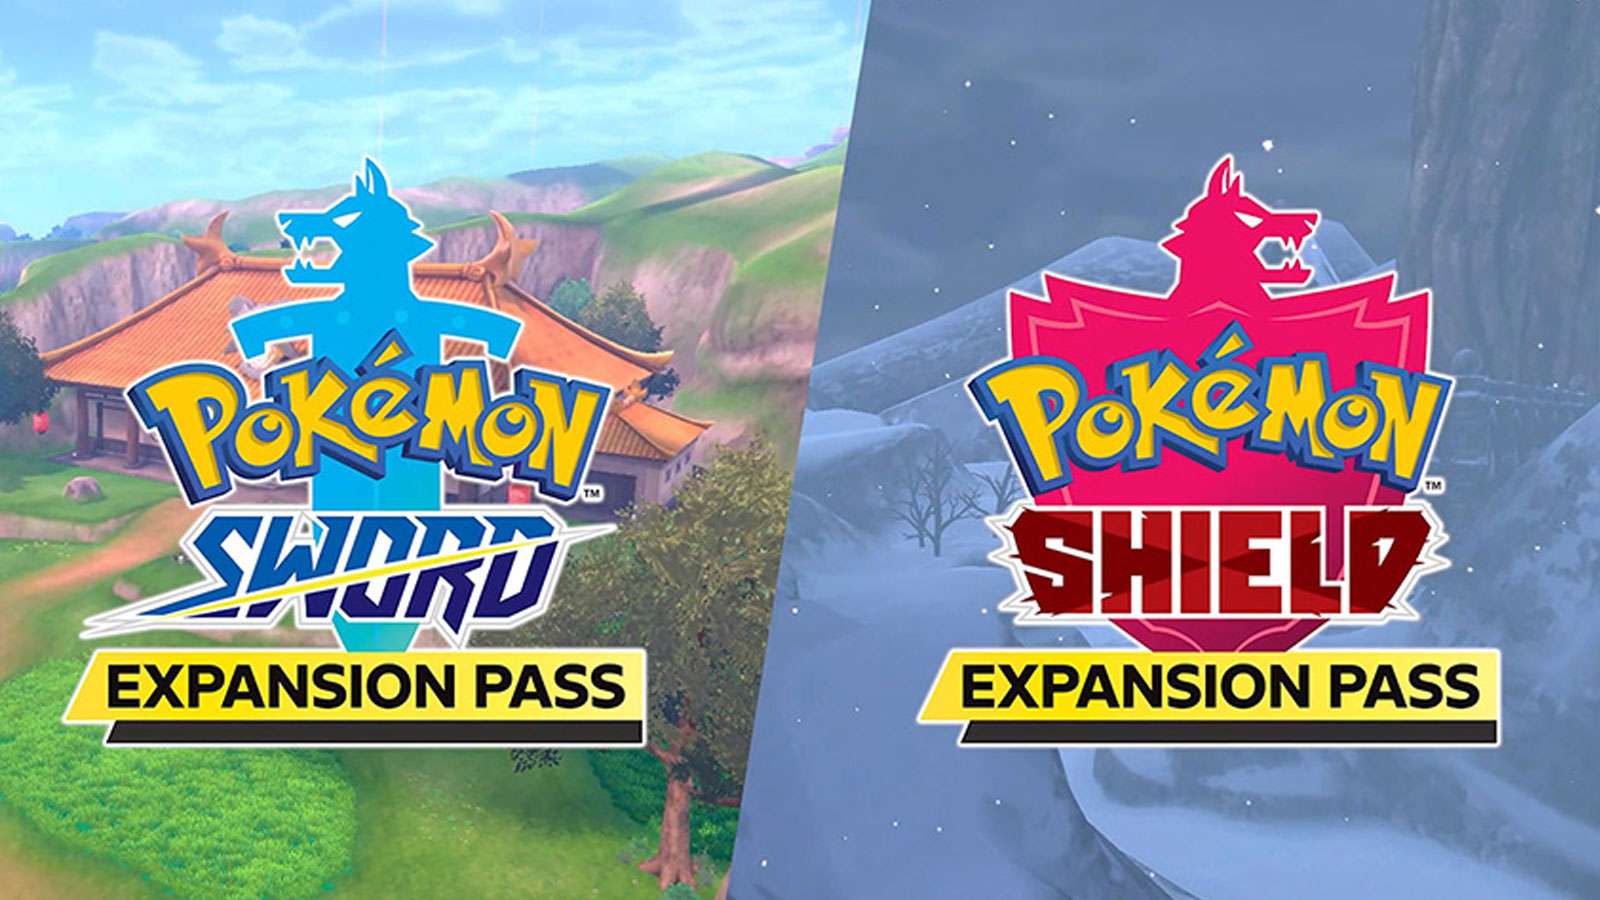 Pokemon sword shield expansion pass